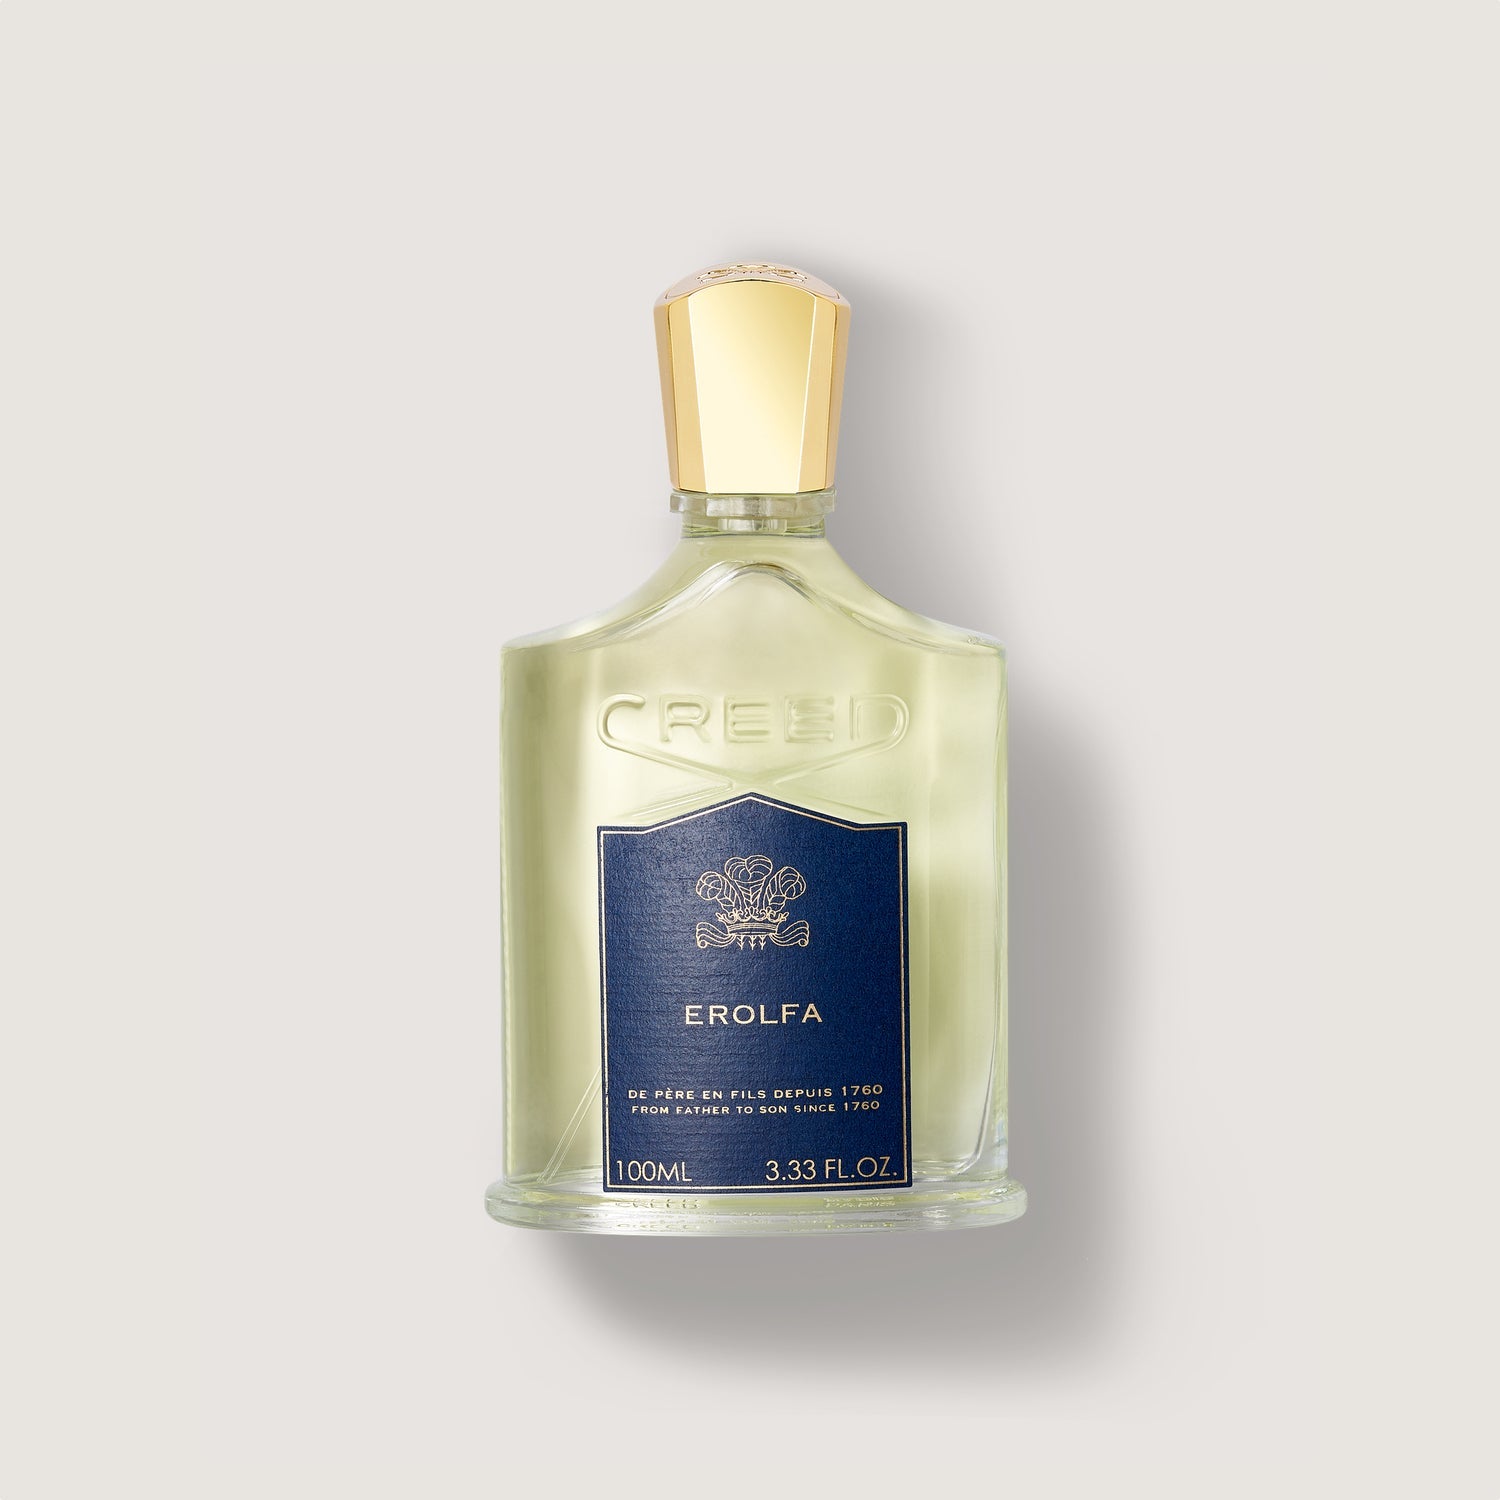 Perfumers Alcohol - 250ML / 500ML / 1L